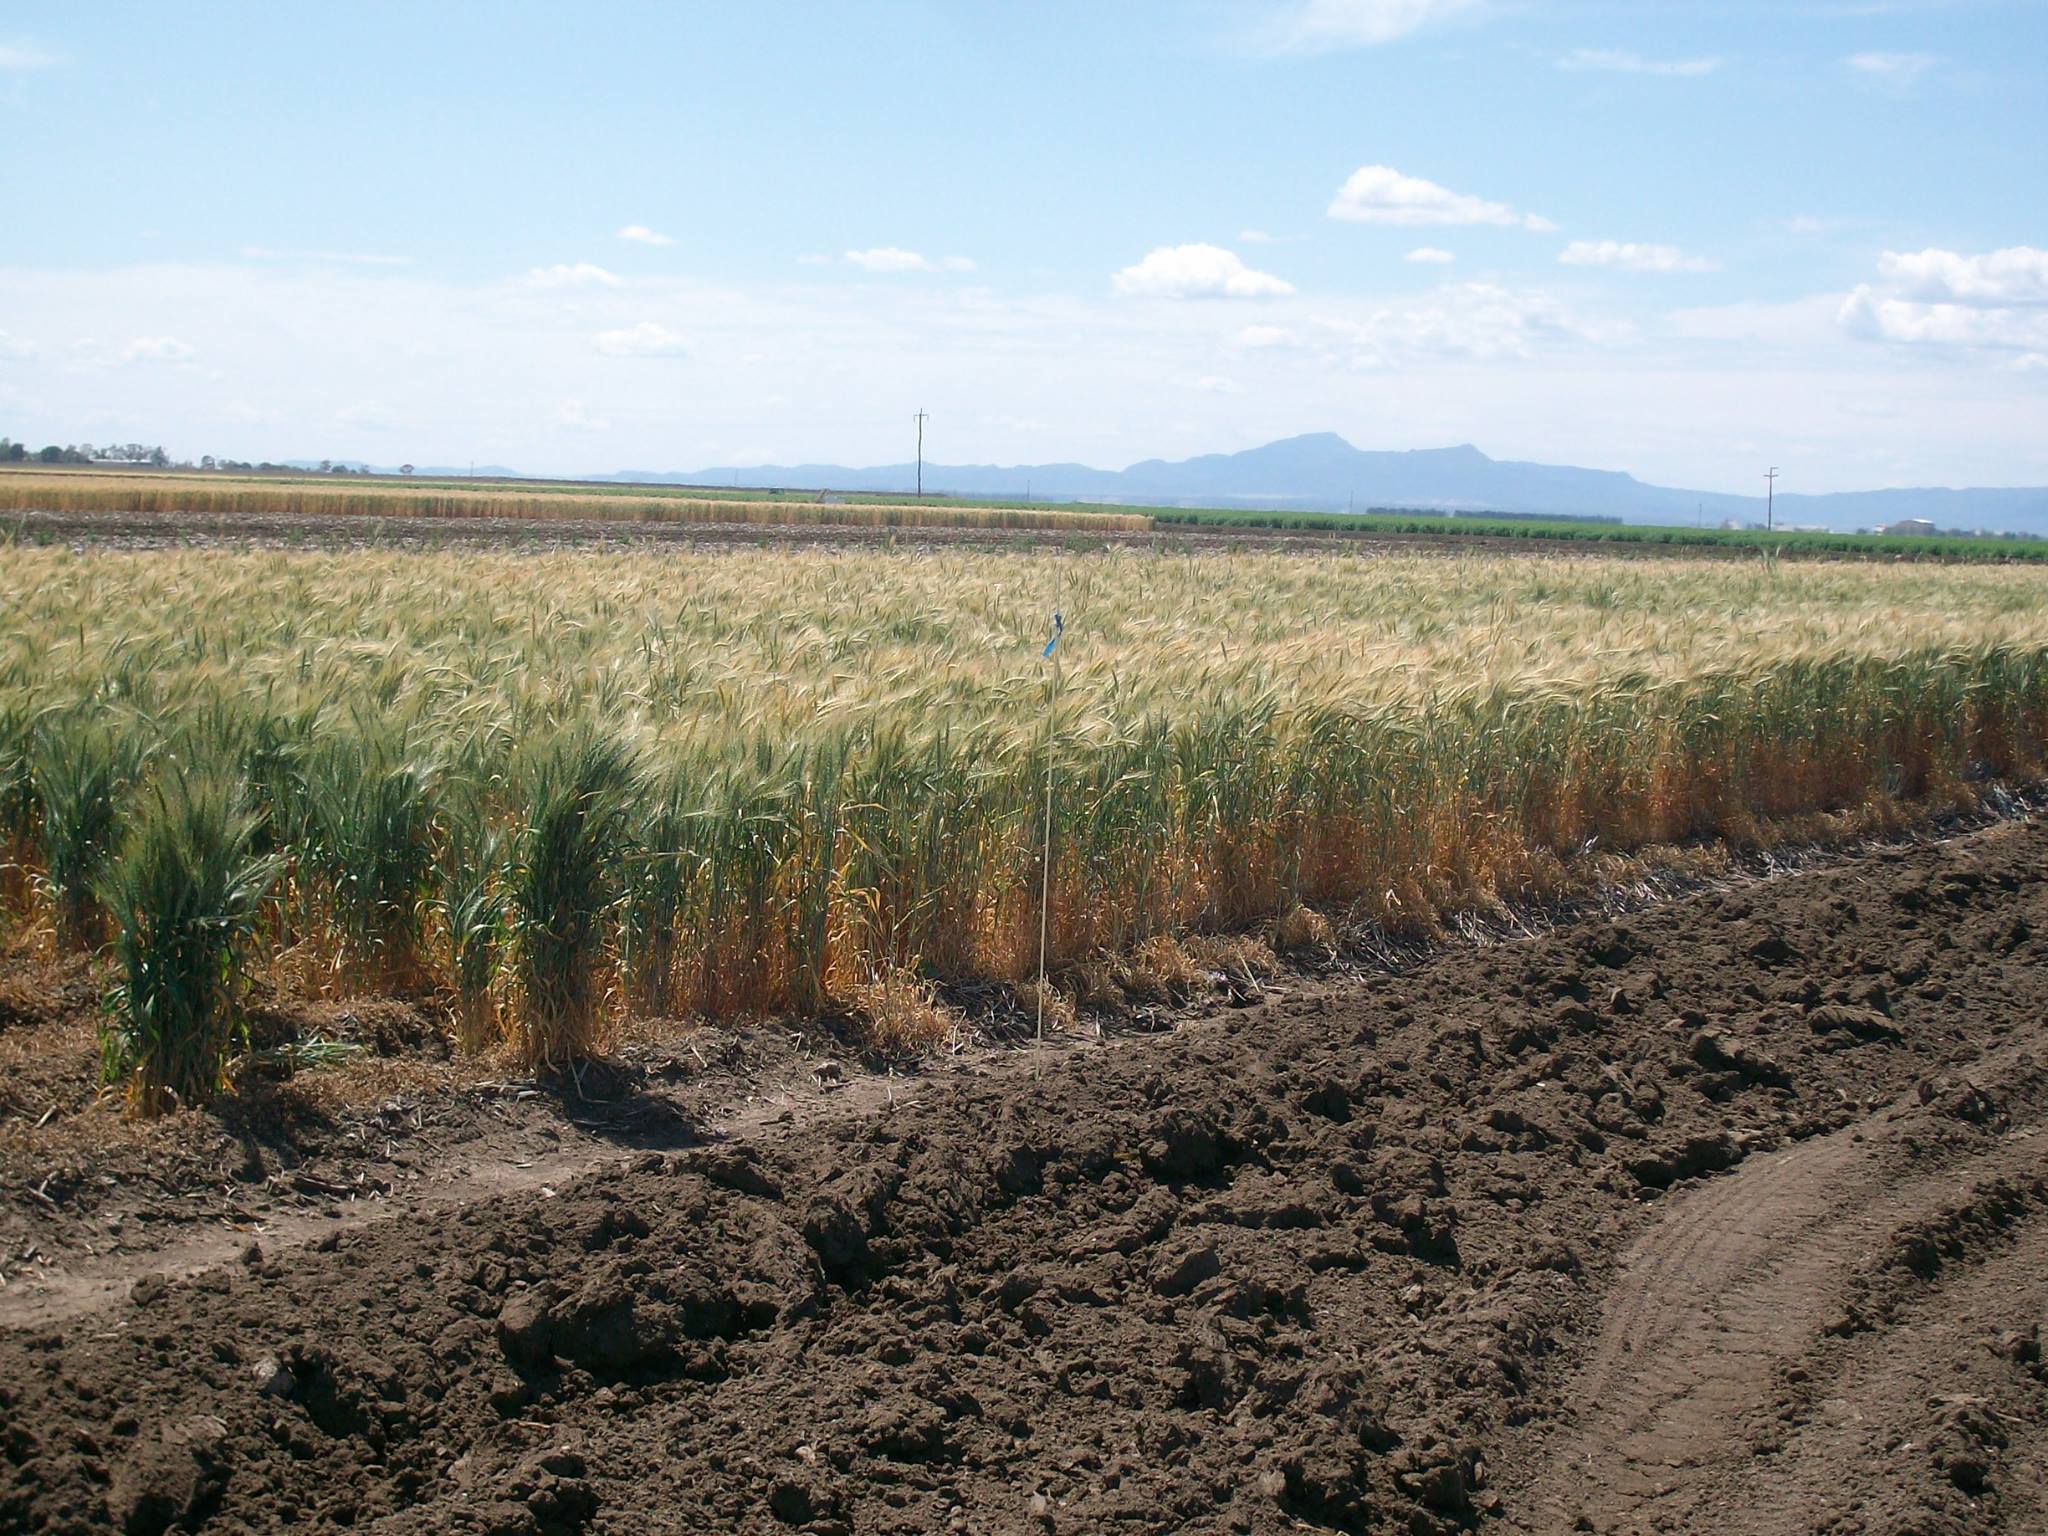 Wheat crops in Narrabri's heavy clay soils